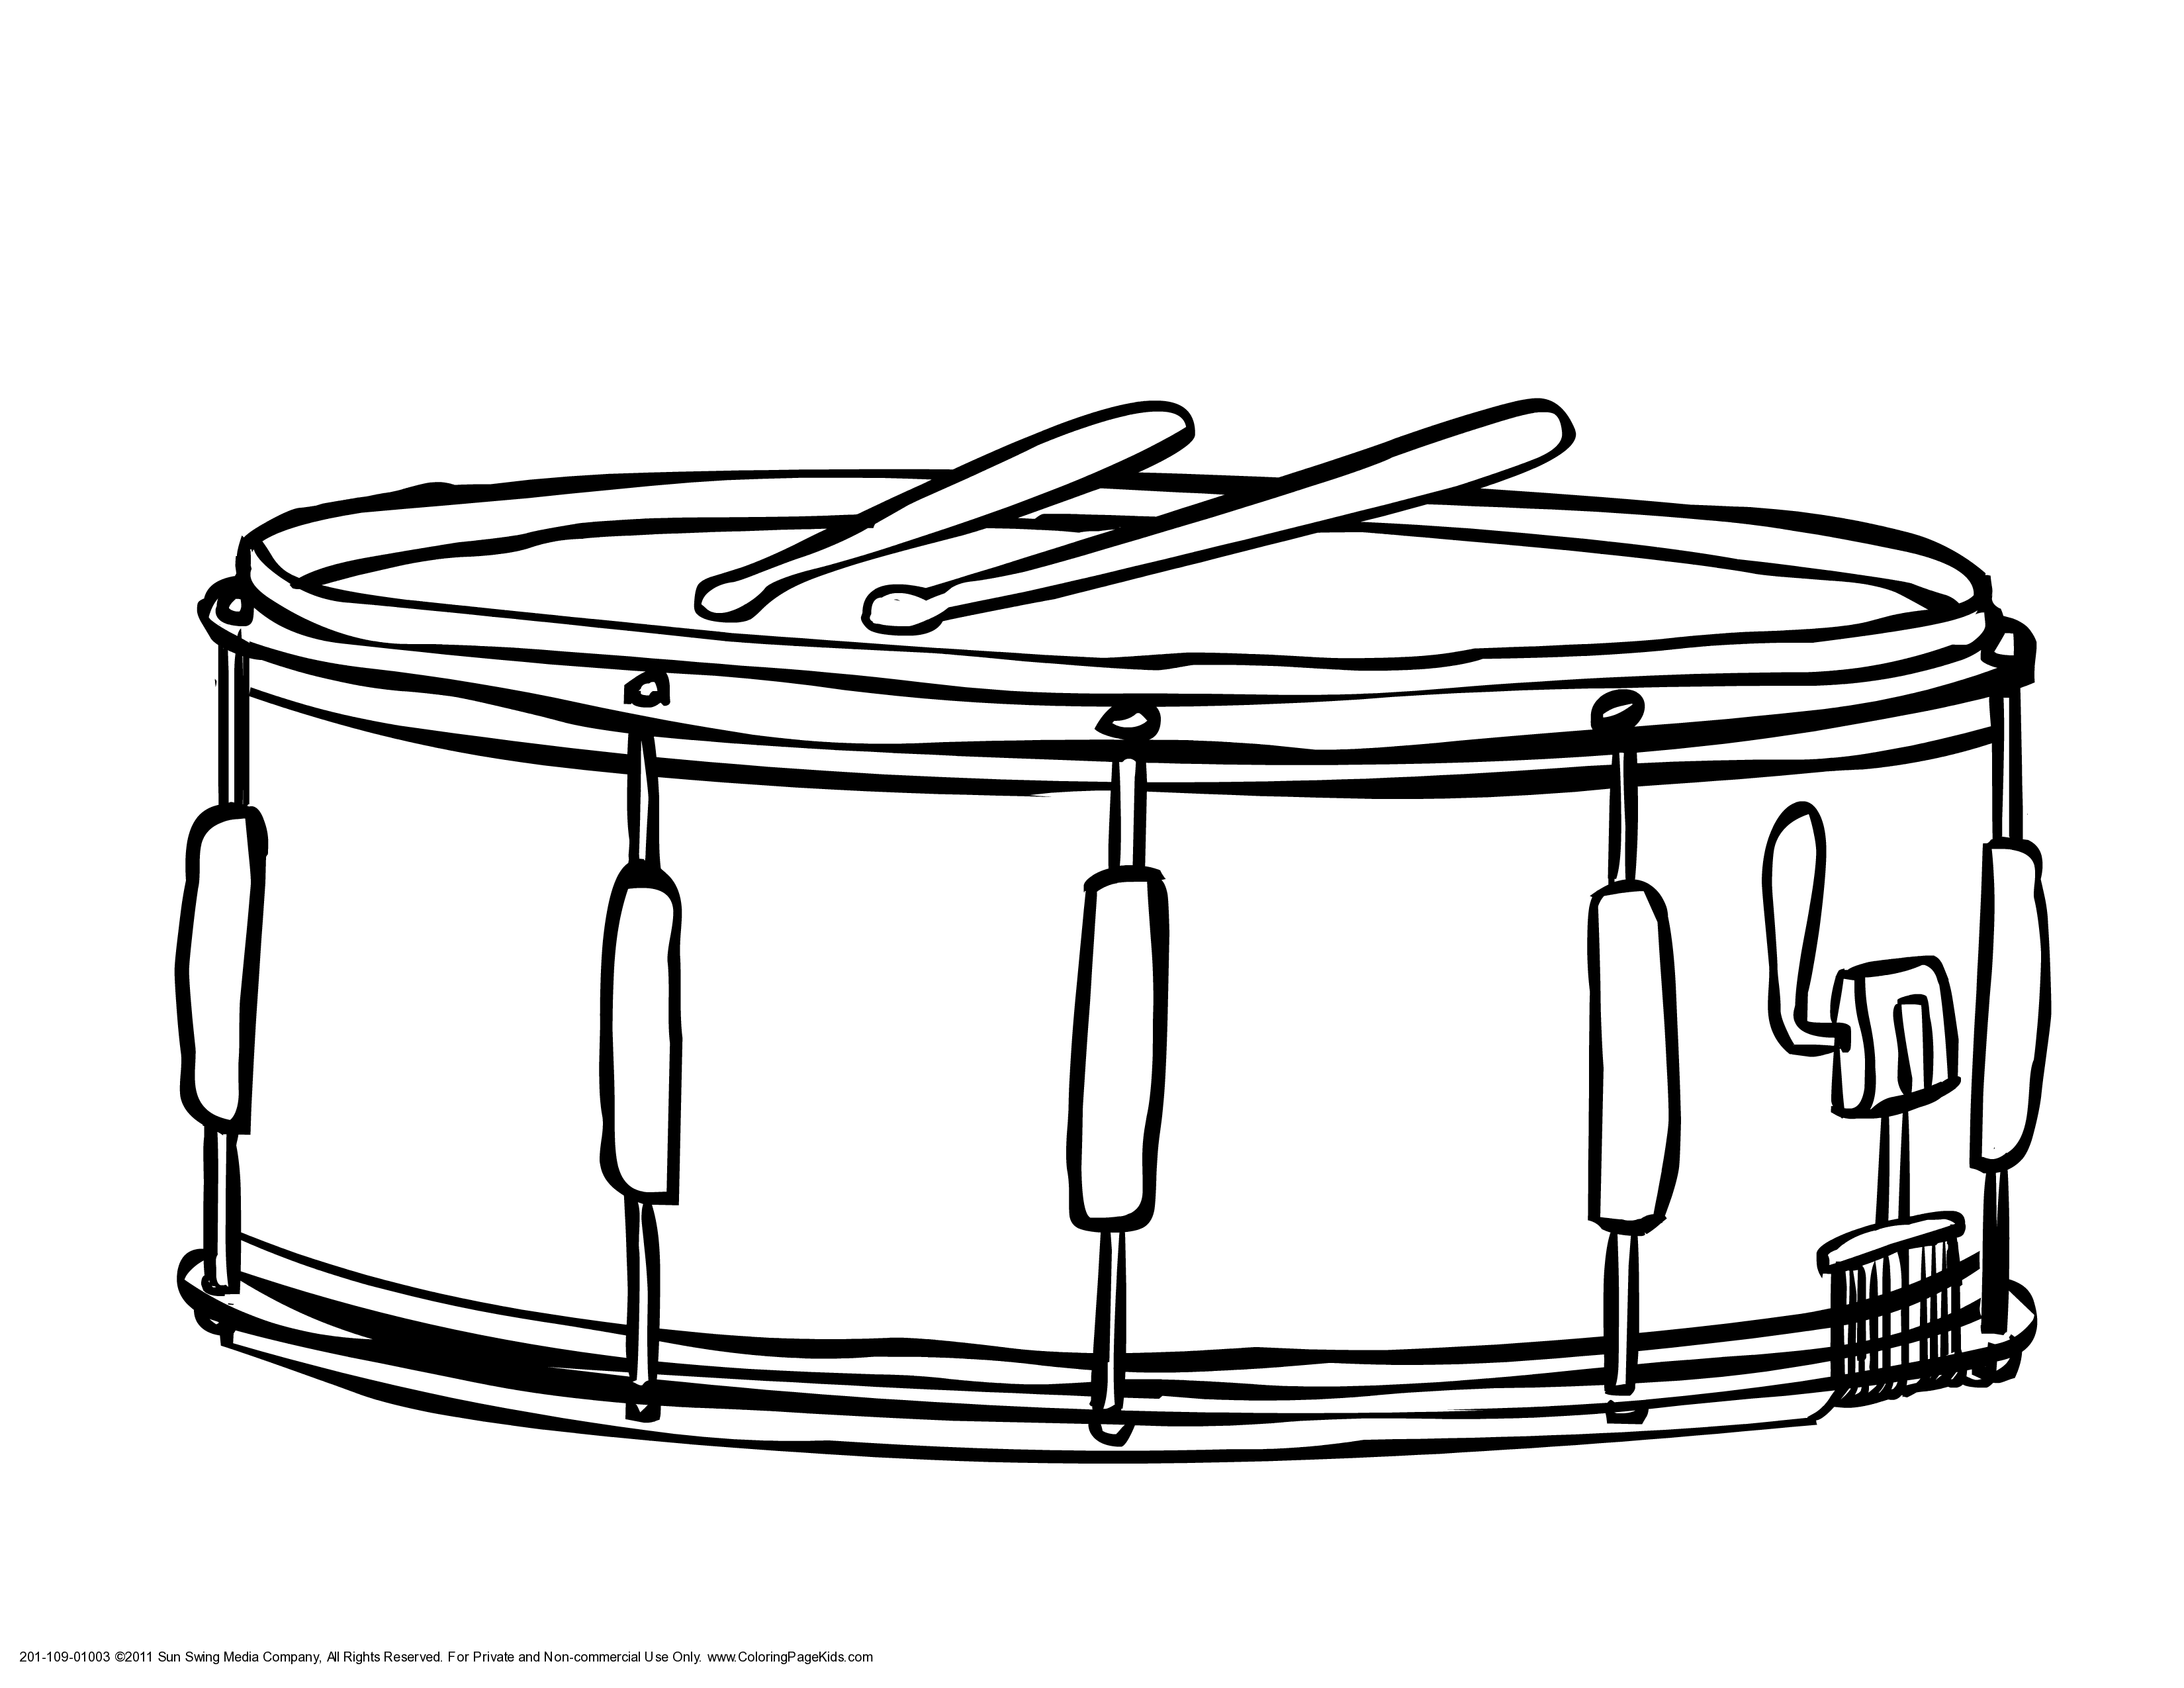 Snare Drum Clip Art - ClipArt Best